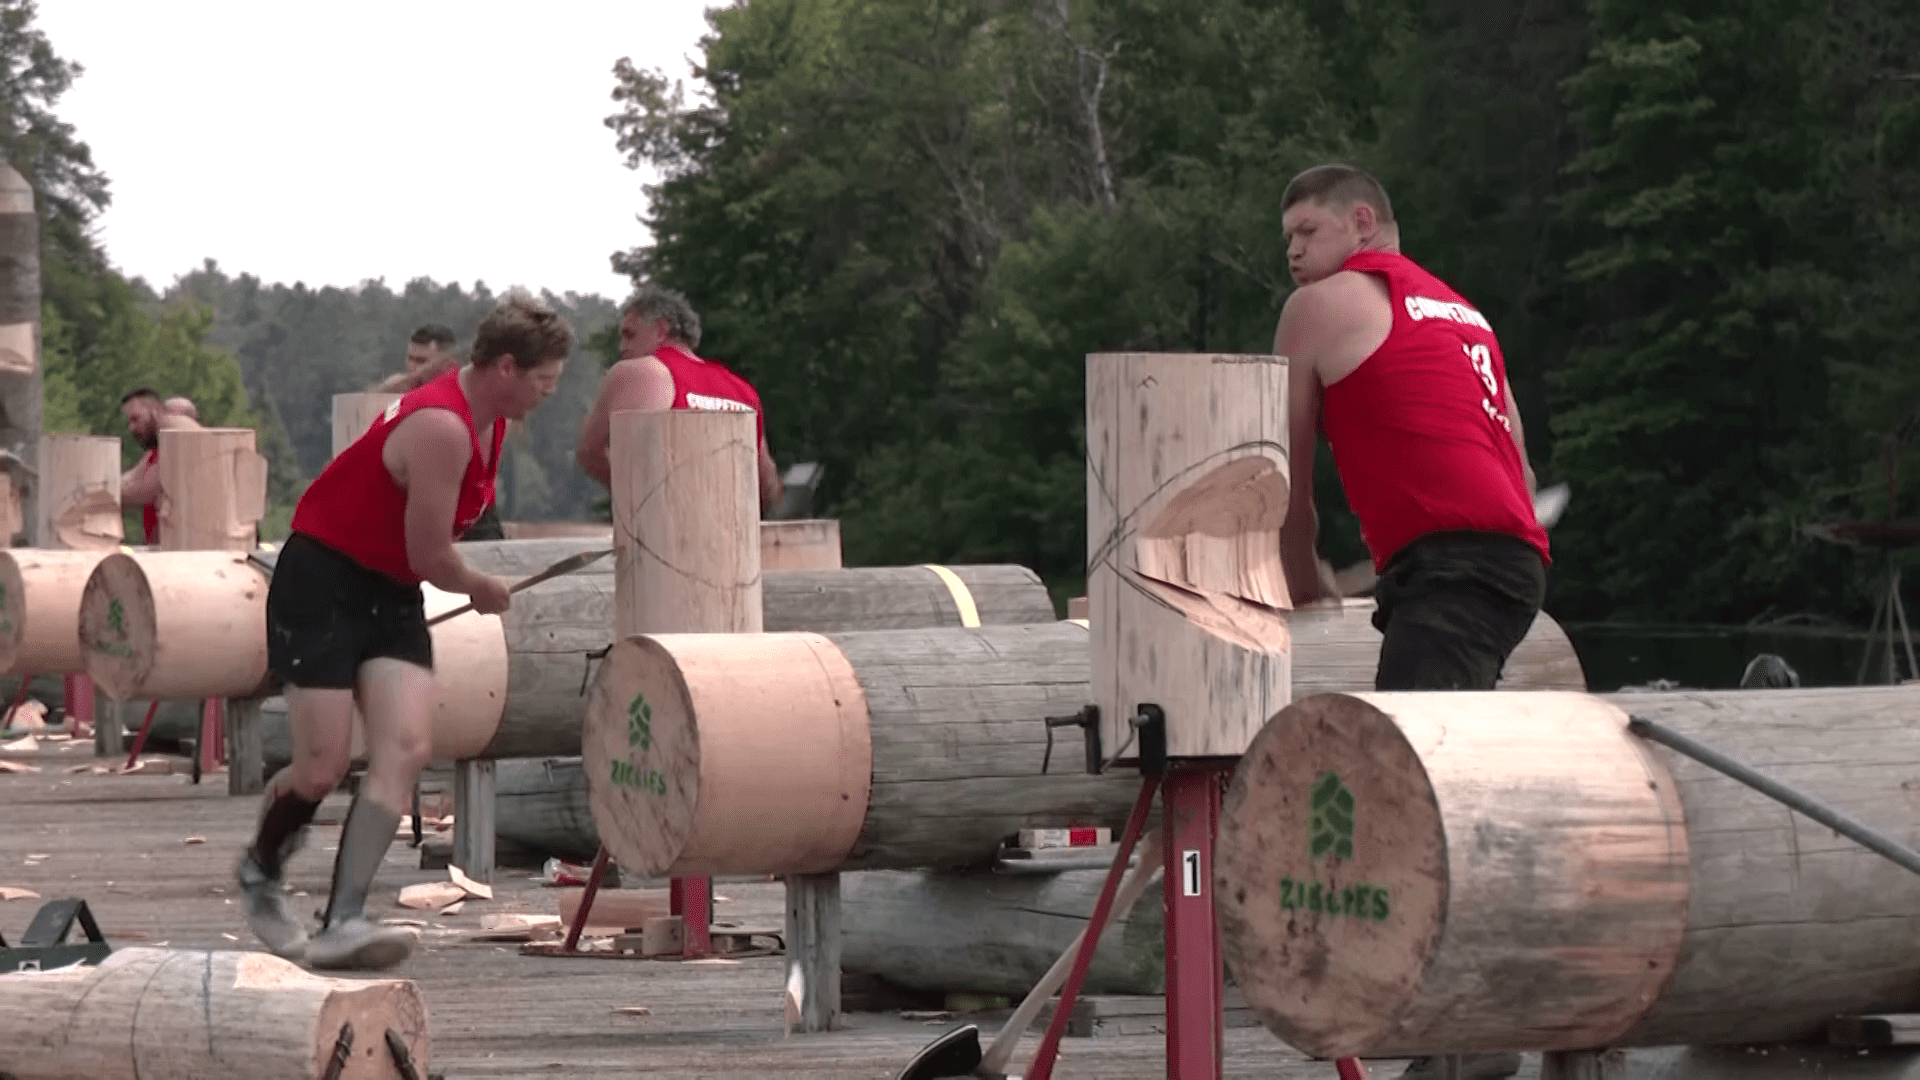 63rd Annual Lumberjack World Championships